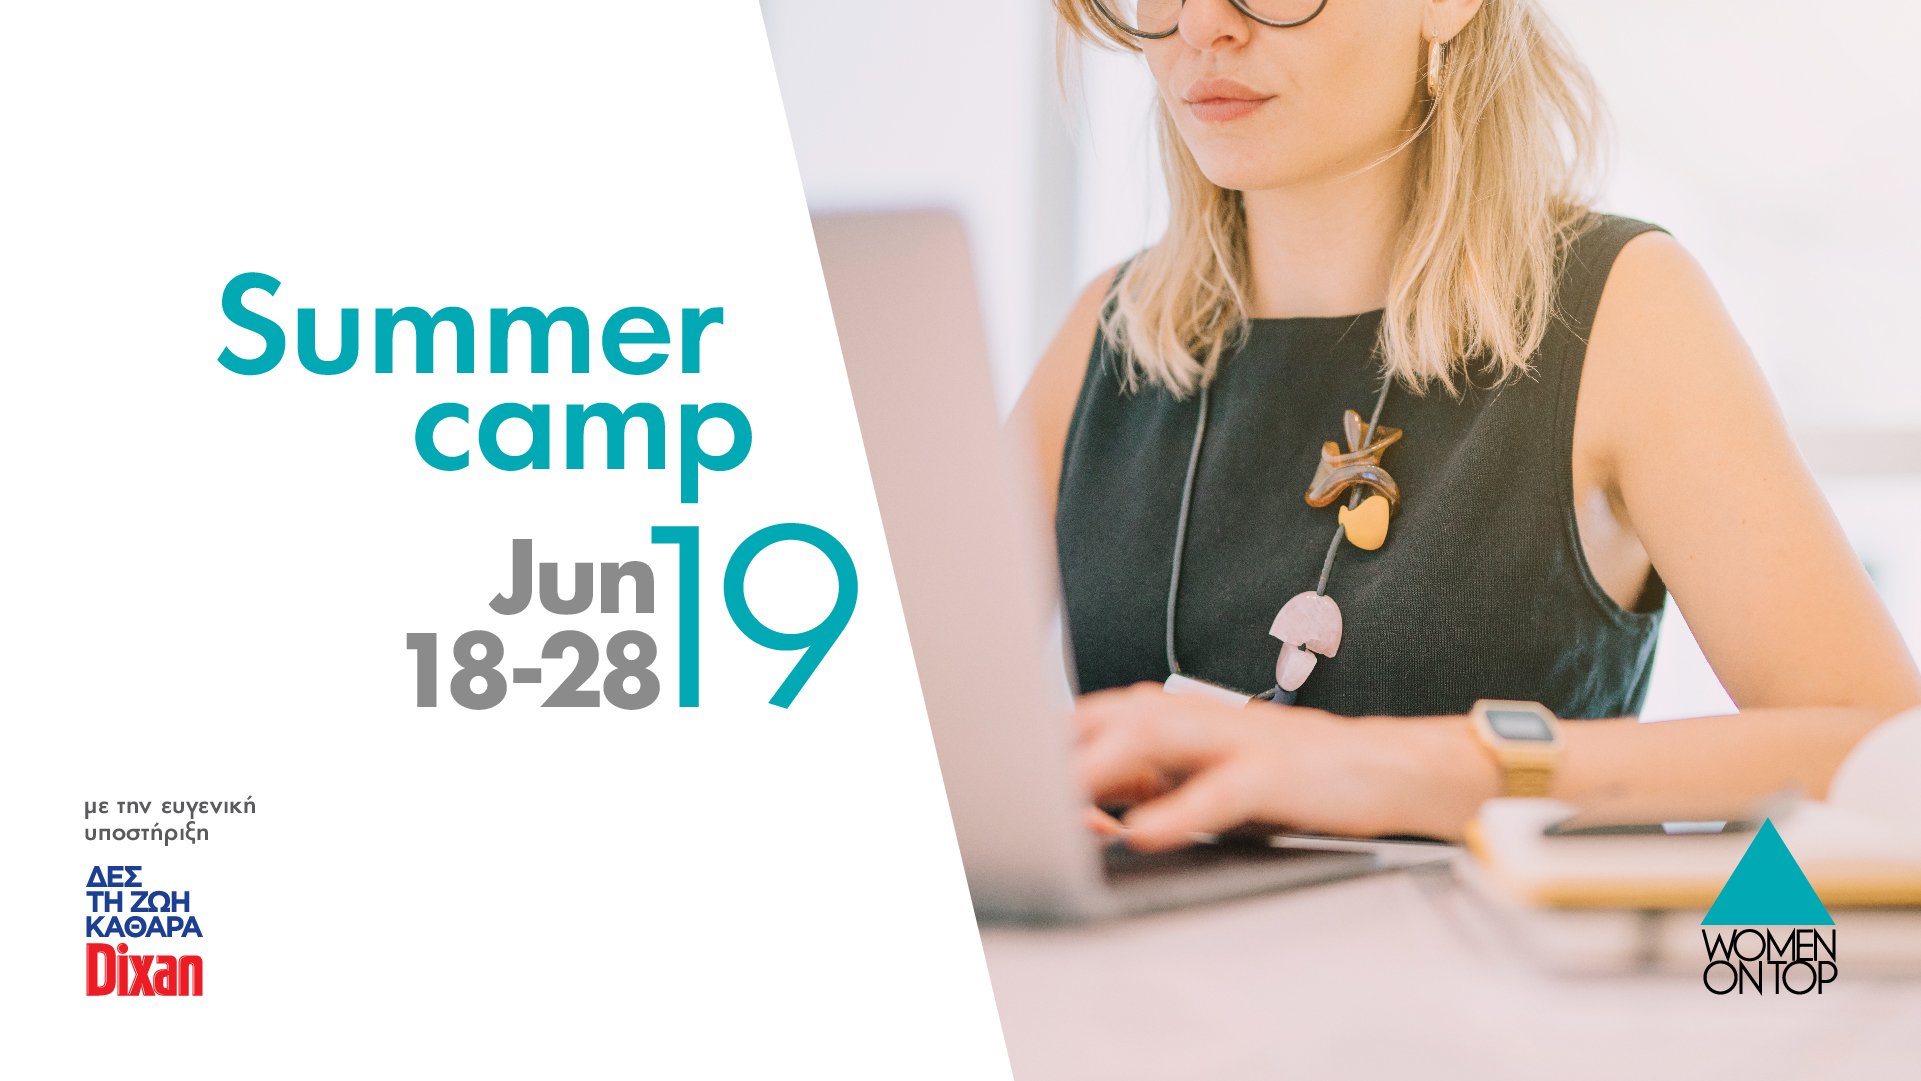 SummerCamp 2019 facebook event